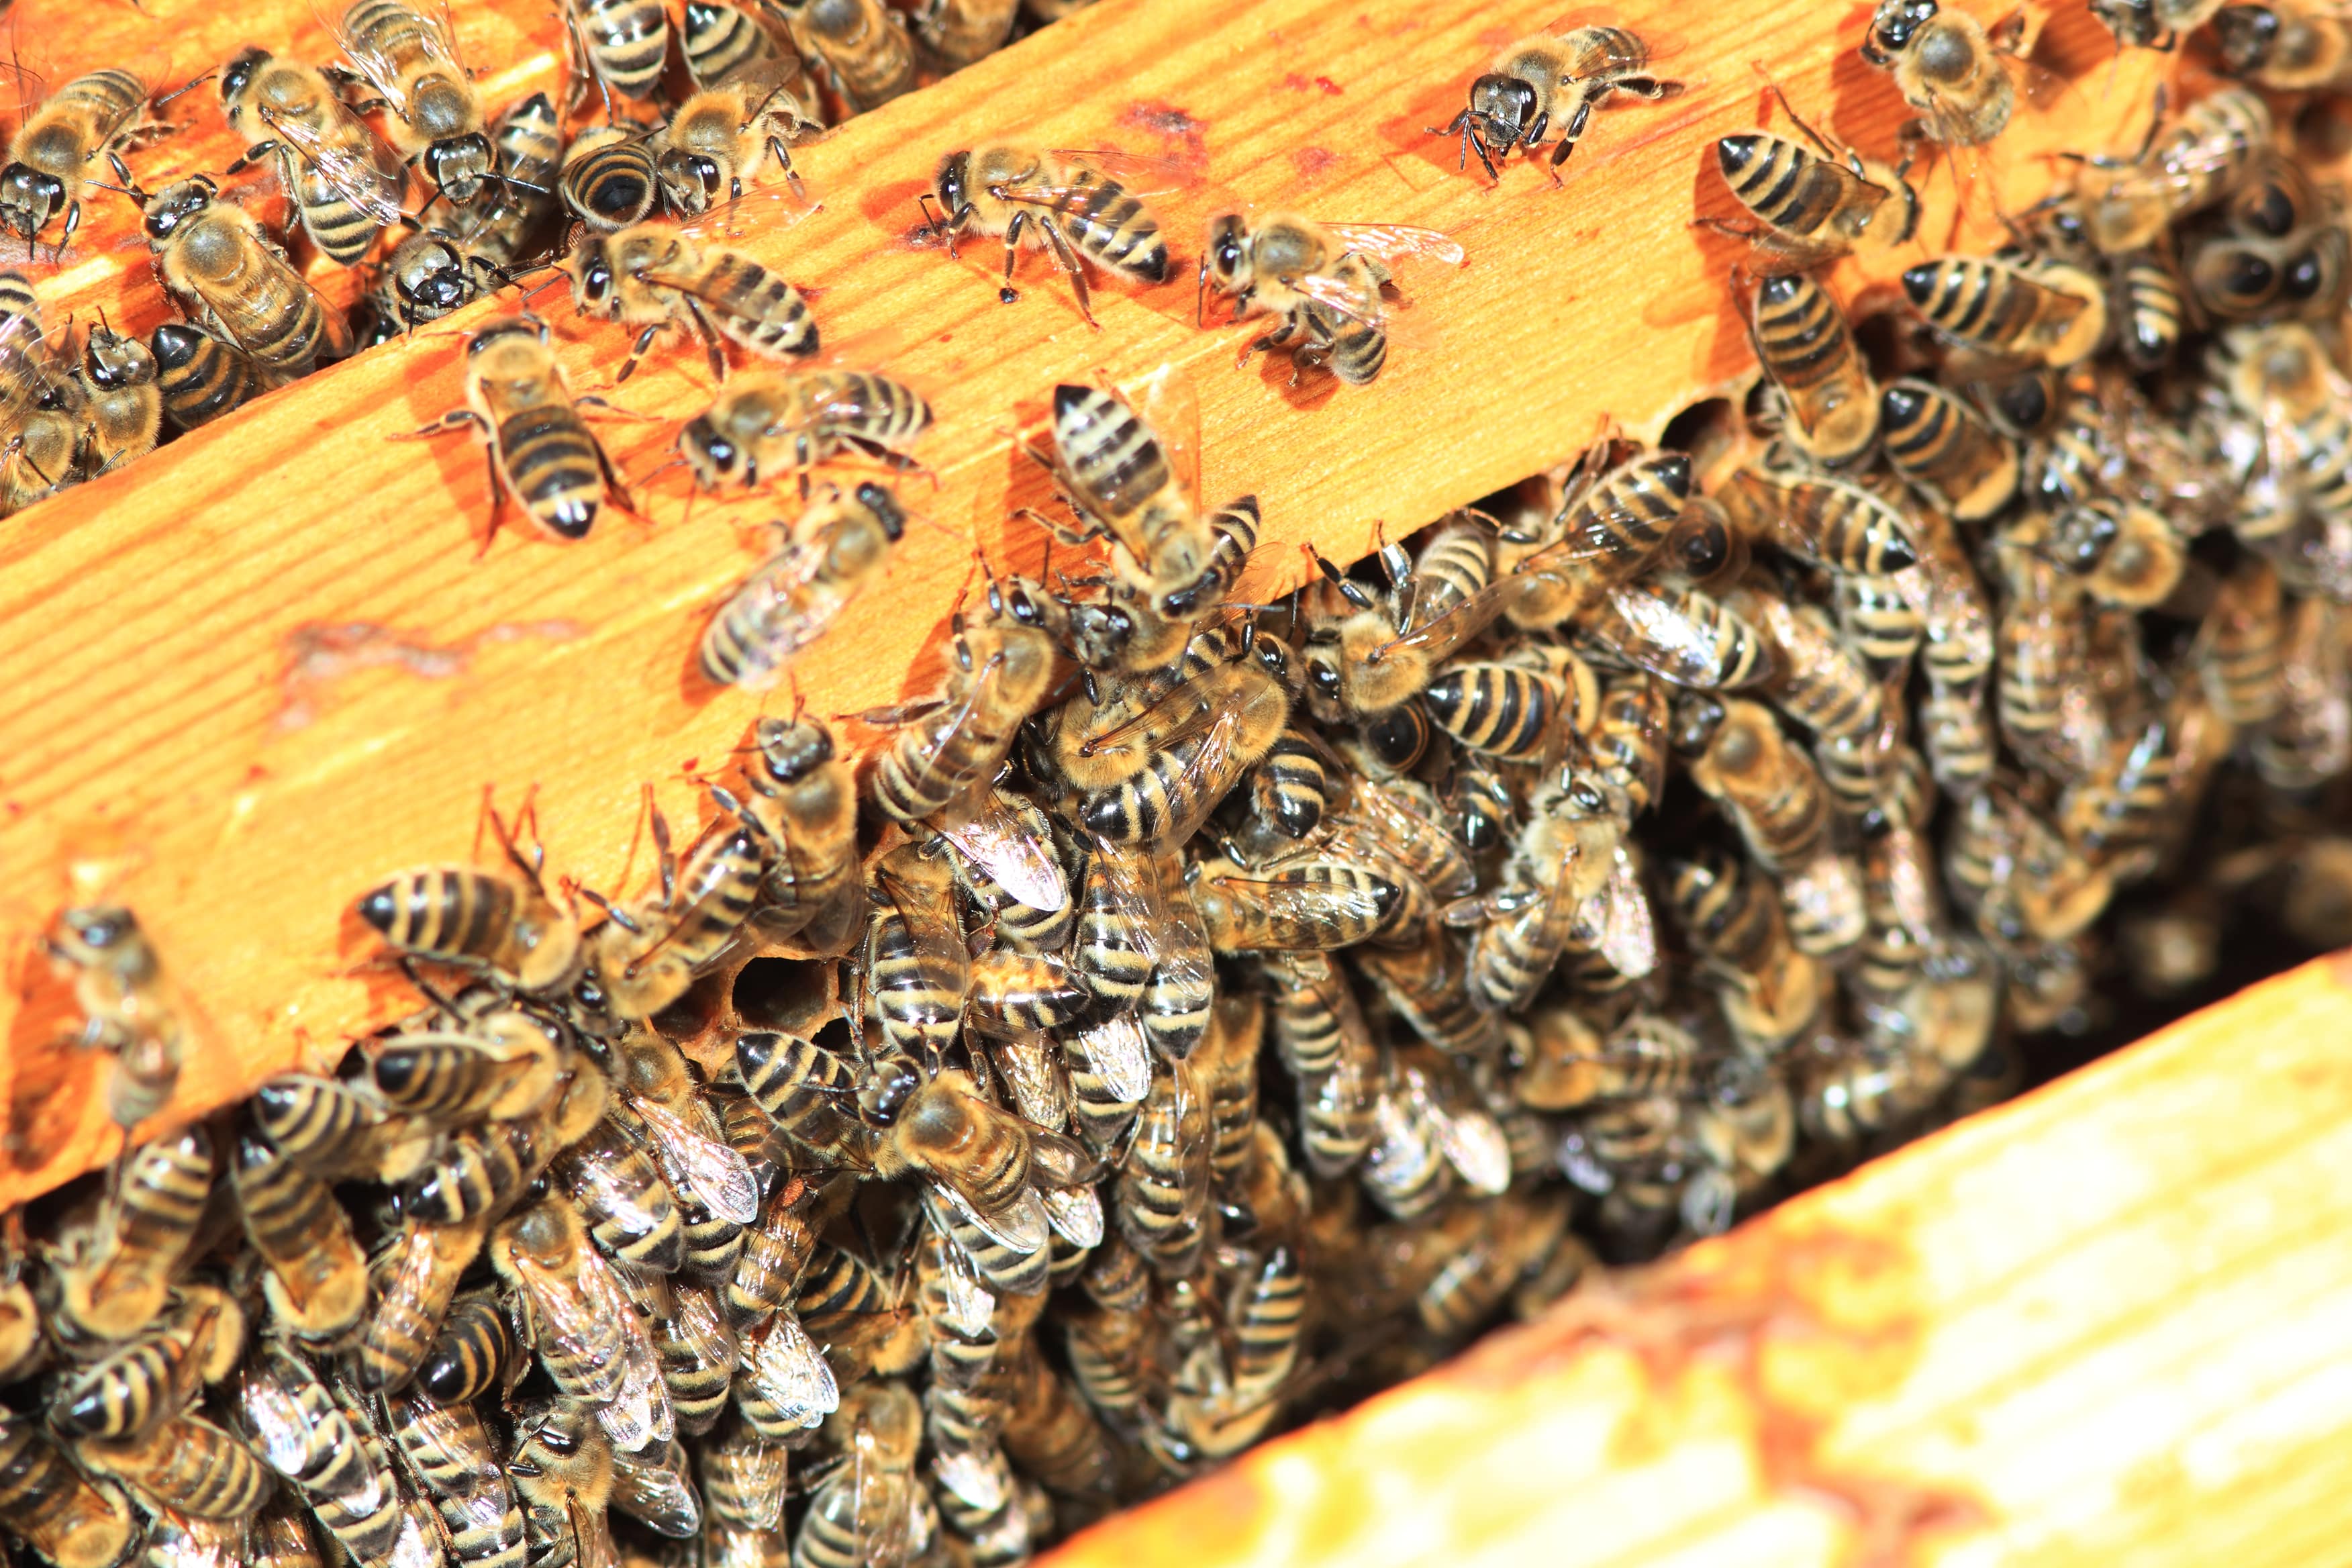 We ship to beekeepers in the following beekeeping cities near me in the state of Kansas listings for queen honey bees supply results for beekeeping honeybee supplies for sale free shipping most orders over $100 around the United States: │Abbyville  67510 
│Abilene  67410 
│Admire  66830 
│Agenda  66930 
│Agra  67621 
│Albert  67511 
│Alden  67512 
│Alexander  67513 
│Allen  66833 
│Alma  66401 
│Almena  67622 
│Alta Vista  66834 
│Altamont  67330 
│Alton  67623 
│Altoona  66710 
│Americus  66835 
│Andale  67001 
│Andover  67002 
│Anthony  67003 
│Arcadia  66711 
│Argonia  67004 
│Arkansas City  67005 
│Arlington  67514 
│Arma  66712 
│Arnold  67515 
│Ashland  67831 
│Assaria  67416 
│Atchison  66002 
│Athol  66932 
│Atlanta  67008 
│Attica  67009 
│Atwood  67730 
│Auburn  66402 
│Augusta  67010 
│Aurora  67417 
│Axtell  66403 
│Baileyville  66404 
│Baldwin City  66006 
│Barnard  67418 
│Barnes  66933 
│Bartlett  67332 
│Basehor  66007 
│Baxter Springs  66713 
│Bazine  67516 
│Beattie  66406 
│Beaumont  67012 
│Beeler  67518 
│Belle Plaine  67013 
│Belleville  66935 
│Beloit  67420 
│Belpre  67519 
│Belvue  66407 
│Bendena  66008 
│Benedict  66714 
│Bennington  67422 
│Bentley  67016 
│Benton  67017 
│Bern  66408 
│Berryton  66409 
│Beverly  67423 
│Bird City  67731 
│Bison  67520 
│Blue Mound  66010 
│Blue Rapids  66411 
│Bluff City  67018 
│Bogue  67625 
│Bonner Springs  66012 
│Bremen  66412 
│Brewster  67732 
│Bronson  66716 
│Brookville  67425 
│Brownell  67521 
│Bucklin  67834 
│Bucyrus  66013 
│Buffalo  66717 
│Buhler  67522 
│Bunker Hill  67626 
│Burden  67019 
│Burdett  67523 
│Burdick  66838 
│Burlingame  66413 
│Burlington  66839 
│Burns  66840 
│Burr Oak  66936 
│Burrton  67020 
│Bushton  67427 
│Byers  67021 
│Caldwell  67022 
│Cambridge  67023 
│Caney  67333 
│Canton  67428 
│Carbondale  66414 
│Cassoday  66842 
│Catharine  67627 
│Cawker City  67430 
│Cedar  67628 
│Cedar Point  66843 
│Cedar Vale  67024 
│Centerville  66014 
│Centralia  66415 
│Chanute  66720 
│Chapman  67431 
│Chase  67524 
│Chautauqua  67334 
│Cheney  67025 
│Cherokee  66724 
│Cherryvale  67335 
│Chetopa  67336 
│Cimarron  67835 
│Circleville  66416 
│Claflin  67525 
│Clay Center  67432 
│Clayton  67629 
│Clearview City  66019 
│Clearwater  67026 
│Clifton  66937 
│Clyde  66938 
│Coats  67028 
│Coffeyville  67337 
│Colby  67701 
│Coldwater  67029 
│Collyer  67631 
│Colony  66015 
│Columbus  66725 
│Colwich  67030 
│Concordia  66901 
│Conway Springs  67031 
│Coolidge  67836 
│Copeland  67837 
│Corning  66417 
│Cottonwood Falls  66845 
│Council Grove  66846 
│Courtland  66939 
│Crestline  66728 
│Cuba  66940 
│Cummings  66016 
│Cunningham  67035 
│Damar  67632 
│Danville  67036 
│De Soto  66018 
│Dearing  67340 
│Deerfield  67838 
│Delia  66418 
│Delphos  67436 
│Denison  66419 
│Dennis  67341 
│Denton  66017 
│Derby  67037 
│Dexter  67038 
│Dighton  67839 
│Dodge City  67801 
│Dorrance  67634 
│Douglass  67039 
│Dover  66420 
│Downs  67437 
│Dresden  67635 
│Durham  67438 
│Dwight  66849 
│Easton  66020 
│Edgerton  66021 
│Edna  67342 
│Edson  67733 
│Edwardsville  66113 
│Effingham  66023 
│El Dorado  67042 
│Elbing  67041 
│Elk City  67344 
│Elk Falls  67345 
│Elkhart  67950 
│Ellinwood  67526 
│Ellis  67637 
│Ellsworth  67439 
│Elmdale  66850 
│Elsmore  66732 
│Elwood  66024 
│Emmett  66422 
│Emporia  66801 
│Englewood  67840 
│Ensign  67841 
│Enterprise  67441 
│Erie  66733 
│Esbon  66941 
│Eskridge  66423 
│Eudora  66025 
│Eureka  67045 
│Everest  66424 
│Fairview  66425 
│Fall River  67047 
│Falun  67442 
│Farlington  66734 
│Florence  66851 
│Fontana  66026 
│Ford  67842 
│Formoso  66942 
│Fort Dodge  67843 
│Fort Leavenworth  66027 
│Fort Riley  66442 
│Fort Scott  66701 
│Fostoria  66426 
│Fowler  67844 
│Frankfort  66427 
│Franklin  66735 
│Fredonia  66736 
│Freeport  67049 
│Frontenac  66763 
│Fulton  66738 
│Galena  66739 
│Galesburg  66740 
│Galva  67443 
│Garden City  67846 
│Garden Plain  67050 
│Gardner  66030 
│Garfield  67529 
│Garland  66741 
│Garnett  66032 
│Gas  66742 
│Gaylord  67638 
│Gem  67734 
│Geneseo  67444 
│Geuda Springs  67051 
│Girard  66743 
│Glade  67639 
│Glasco  67445 
│Glen Elder  67446 
│Goddard  67052 
│Goessel  67053 
│Goff  66428 
│Goodland  67735 
│Gorham  67640 
│Gove  67736 
│Grainfield  67737 
│Grantville  66429 
│Great Bend  67530 
│Greeley  66033 
│Green  67447 
│Greenleaf  66943 
│Greensburg  67054 
│Greenwich  67055 
│Grenola  67346 
│Gridley  66852 
│Grinnell  67738 
│Gypsum  67448 
│Haddam  66944 
│Halstead  67056 
│Hamilton  66853 
│Hanover  66945 
│Hanston  67849 
│Hardtner  67057 
│Harper  67058 
│Hartford  66854 
│Harveyville  66431 
│Havana  67347 
│Haven  67543 
│Havensville  66432 
│Haviland  67059 
│Hays  67601 
│Haysville  67060 
│Hazelton  67061 
│Healy  67850 
│Hepler  66746 
│Herington  67449 
│Herndon  67739 
│Hesston  67062 
│Hiawatha  66434 
│Highland  66035 
│Hill City  67642 
│Hillsboro  67063 
│Hillsdale  66036 
│Hoisington  67544 
│Holcomb  67851 
│Hollenberg  66946 
│Holton  66436 
│Holyrood  67450 
│Home  66438 
│Hope  67451 
│Horton  66439 
│Howard  67349 
│Hoxie  67740 
│Hoyt  66440 
│Hudson  67545 
│Hugoton  67951 
│Humboldt  66748 
│Hunter  67452 
│Hutchinson  67501 
│Independence  67301 
│Ingalls  67853 
│Inman  67546 
│Iola  66749 
│Isabel  67065 
│Iuka  67066 
│Jamestown  66948 
│Jennings  67643 
│Jetmore  67854 
│Jewell  66949 
│Johnson  67855 
│Junction City  66441 
│Kanopolis  67454 
│Kanorado  67741 
│Kansas City  66101 
│Kechi  67067 
│Kendall  67857 
│Kensington  66951 
│Kincaid  66039 
│Kingman  67068 
│Kinsley  67547 
│Kiowa  67070 
│Kirwin  67644 
│Kismet  67859 
│La Crosse  67548 
│La Cygne  66040 
│La Harpe  66751 
│Lake City  67071 
│Lakin  67860 
│Lamont  66855 
│Lancaster  66041 
│Lane  66042 
│Lansing  66043 
│Larned  67550 
│Latham  67072 
│Lawrence  66044 
│Le Roy  66857 
│Leavenworth  66048 
│Leawood  66206 
│Lebanon  66952 
│Lebo  66856 
│Lecompton  66050 
│Lehigh  67073 
│Lenexa  66215 
│Lenora  67645 
│Leon  67074 
│Leonardville  66449 
│Leoti  67861 
│Levant  67743 
│Lewis  67552 
│Liberal  67901 
│Liberty  67351 
│Liebenthal  67553 
│Lincoln  67455 
│Lincolnville  66858 
│Lindsborg  67456 
│Linn  66953 
│Linwood  66052 
│Little River  67457 
│Logan  67646 
│Long Island  67647 
│Longford  67458 
│Longton  67352 
│Lorraine  67459 
│Lost Springs  66859 
│Louisburg  66053 
│Lucas  67648 
│Ludell  67744 
│Luray  67649 
│Lyndon  66451 
│Lyons  67554 
│Macksville  67557 
│Madison  66860 
│Mahaska  66955 
│Maize  67101 
│Manhattan  66502 
│Mankato  66956 
│Manter  67862 
│Maple City  67102 
│Maple Hill  66507 
│Mapleton  66754 
│Marienthal  67863 
│Marion  66861 
│Marquette  67464 
│Marysville  66508 
│Matfield Green  66862 
│Mayetta  66509 
│Mayfield  67103 
│Mc Cracken  67556 
│Mc Cune  66753 
│Mc Donald  67745 
│Mc Farland  66501 
│Mc Louth  66054 
│Mcconnell Afb  67221 
│Mcpherson  67460 
│Meade  67864 
│Medicine Lodge  67104 
│Melvern  66510 
│Meriden  66512 
│Milan  67105 
│Milford  66514 
│Milton  67106 
│Miltonvale  67466 
│Minneapolis  67467 
│Minneola  67865 
│Mission  66201 
│Moline  67353 
│Montezuma  67867 
│Moran  66755 
│Morganville  67468 
│Morland  67650 
│Morrill  66515 
│Morrowville  66958 
│Moscow  67952 
│Mound City  66056 
│Mound Valley  67354 
│Moundridge  67107 
│Mount Hope  67108 
│Mulberry  66756 
│Mullinville  67109 
│Mulvane  67110 
│Munden  66959 
│Murdock  67111 
│Muscotah  66058 
│Narka  66960 
│Nashville  67112 
│Natoma  67651 
│Neal  66863 
│Nekoma  67559 
│Neodesha  66757 
│Neosho Falls  66758 
│Neosho Rapids  66864 
│Ness City  67560 
│Netawaka  66516 
│New Albany  66759 
│New Cambria  67470 
│New Century  66031 
│Newton  67114 
│Nickerson  67561 
│Niotaze  67355 
│Norcatur  67653 
│North Newton  67117 
│Norton  67654 
│Nortonville  66060 
│Norway  66961 
│Norwich  67118 
│Oakley  67748 
│Oberlin  67749 
│Offerle  67563 
│Ogallah  67656 
│Ogden  66517 
│Oketo  66518 
│Olathe  66051 
│Olmitz  67564 
│Olpe  66865 
│Olsburg  66520 
│Onaga  66521 
│Oneida  66522 
│Opolis  66760 
│Osage City  66523 
│Osawatomie  66064 
│Osborne  67473 
│Oskaloosa  66066 
│Oswego  67356 
│Otis  67565 
│Ottawa  66067 
│Overbrook  66524 
│Overland Park  66204 
│Oxford  67119 
│Ozawkie  66070 
│Palco  67657 
│Palmer  66962 
│Paola  66071 
│Paradise  67658 
│Park  67751 
│Parker  66072 
│Parsons  67357 
│Partridge  67566 
│Pawnee Rock  67567 
│Paxico  66526 
│Peabody  66866 
│Peck  67120 
│Penokee  67659 
│Perry  66073 
│Peru  67360 
│Pfeifer  67660 
│Phillipsburg  67661 
│Piedmont  67122 
│Pierceville  67868 
│Piqua  66761 
│Pittsburg  66762 
│Plains  67869 
│Plainville  67663 
│Pleasanton  66075 
│Plevna  67568 
│Pomona  66076 
│Portis  67474 
│Potter  66077 
│Potwin  67123 
│Powhattan  66527 
│Prairie View  67664 
│Prairie Village  66208 
│Pratt  67124 
│Prescott  66767 
│Pretty Prairie  67570 
│Princeton  66078 
│Protection  67127 
│Quenemo  66528 
│Quinter  67752 
│Rago  67128 
│Ramona  67475 
│Randall  66963 
│Randolph  66554 
│Ransom  67572 
│Rantoul  66079 
│Raymond  67573 
│Reading  66868 
│Redfield  66769 
│Republic  66964 
│Rexford  67753 
│Richfield  67953 
│Richmond  66080 
│Riley  66531 
│Riverton  66770 
│Robinson  66532 
│Rock  67131 
│Rolla  67954 
│Rosalia  67132 
│Rose Hill  67133 
│Rossville  66533 
│Roxbury  67476 
│Rozel  67574 
│Rush Center  67575 
│Russell  67665 
│Sabetha  66534 
│Saint Francis  67756 
│Saint George  66535 
│Saint John  67576 
│Saint Marys  66536 
│Saint Paul  66771 
│Salina  67401 
│Satanta  67870 
│Savonburg  66772 
│Sawyer  67134 
│Scammon  66773 
│Scandia  66966 
│Schoenchen  67667 
│Scott City  67871 
│Scranton  66537 
│Sedan  67361 
│Sedgwick  67135 
│Selden  67757 
│Seneca  66538 
│Severy  67137 
│Sharon  67138 
│Sharon Springs  67758 
│Shawnee  66203 
│Shawnee Mission  66250 
│Silver Lake  66539 
│Simpson  67478 
│Smith Center  66967 
│Soldier  66540 
│Solomon  67480 
│South Haven  67140 
│South Hutchinson  67505 
│Spearville  67876 
│Spivey  67142 
│Spring Hill  66083 
│Stafford  67578 
│Stark  66775 
│Sterling  67579 
│Stilwell  66085 
│Stockton  67669 
│Strong City  66869 
│Sublette  67877 
│Summerfield  66541 
│Sun City  67143 
│Sycamore  67363 
│Sylvan Grove  67481 
│Sylvia  67581 
│Syracuse  67878 
│Talmage  67482 
│Tampa  67483 
│Tecumseh  66542 
│Tescott  67484 
│Thayer  66776 
│Tipton  67485 
│Tonganoxie  66086 
│Topeka  66601 
│Toronto  66777 
│Towanda  67144 
│Treece  66778 
│Tribune  67879 
│Troy  66087 
│Turon  67583 
│Tyro  67364 
│Udall  67146 
│Ulysses  67880 
│Uniontown  66779 
│Utica  67584 
│Valley Center  67147 
│Valley Falls  66088 
│Vassar  66543 
│Vermillion  66544 
│Victoria  67671 
│Viola  67149 
│Virgil  66870 
│Wa Keeney  67672 
│Wakarusa  66546 
│Wakefield  67487 
│Waldo  67673 
│Waldron  67150 
│Walker  67674 
│Wallace  67761 
│Walnut  66780 
│Walton  67151 
│Wamego  66547 
│Washington  66968 
│Waterville  66548 
│Wathena  66090 
│Waverly  66871 
│Webber  66970 
│Weir  66781 
│Welda  66091 
│Wellington  67152 
│Wellsville  66092 
│Weskan  67762 
│West Mineral  66782 
│Westmoreland  66549 
│Westphalia  66093 
│Wetmore  66550 
│White City  66872 
│White Cloud  66094 
│Whitewater  67154 
│Whiting  66552 
│Wichita  67201 
│Williamsburg  66095 
│Wilmore  67155 
│Wilsey  66873 
│Wilson  67490 
│Winchester  66097 
│Windom  67491 
│Winfield  67156 
│Winona  67764 
│Woodbine  67492 
│Woodston  67675 
│Wright  67882 
│Yates Center  66783 
│Yoder  67585 
│Zenda  67159 || Lappe's Bee Supply offers free shipping for most orders over $100 to the following counties in the state of Kansas: │Allen County 
│Anderson County 
│Atchison County 
│Barber County 
│Barton County 
│Bourbon County 
│Brown County 
│Butler County 
│Chase County 
│Chautauqua County 
│Cherokee County 
│Cheyenne County 
│Clark County 
│Clay County 
│Cloud County 
│Coffey County 
│Comanche County 
│Cowley County 
│Crawford County 
│Decatur County 
│Dickinson County 
│Doniphan County 
│Douglas County 
│Edwards County 
│Elk County 
│Ellis County 
│Ellsworth County 
│Finney County 
│Ford County 
│Franklin County 
│Geary County 
│Gove County 
│Graham County 
│Grant County 
│Gray County 
│Greeley County 
│Greenwood County 
│Hamilton County 
│Harper County 
│Harvey County 
│Haskell County 
│Hodgeman County 
│Jackson County 
│Jefferson County 
│Jewell County 
│Johnson County 
│Kearny County 
│Kingman County 
│Kiowa County 
│Labette County 
│Lane County 
│Leavenworth County 
│Lincoln County 
│Linn County 
│Logan County 
│Lyon County 
│Marion County 
│Marshall County 
│McPherson County 
│Meade County 
│Miami County 
│Mitchell County 
│Montgomery County 
│Morris County 
│Morton County 
│Nemaha County 
│Neosho County 
│Ness County 
│Norton County 
│Osage County 
│Osborne County 
│Ottawa County 
│Pawnee County 
│Phillips County 
│Pottawatomie County 
│Pratt County 
│Rawlins County 
│Reno County 
│Republic County 
│Rice County 
│Riley County 
│Rooks County 
│Rush County 
│Russell County 
│Saline County 
│Scott County 
│Sedgwick County 
│Seward County 
│Shawnee County 
│Sheridan County 
│Sherman County 
│Smith County 
│Stafford County 
│Stanton County 
│Stevens County 
│Sumner County 
│Thomas County 
│Trego County 
│Wabaunsee County 
│Wallace County 
│Washington County 
│Wichita County 
│Wilson County 
│Woodson County 
│Wyandotte County